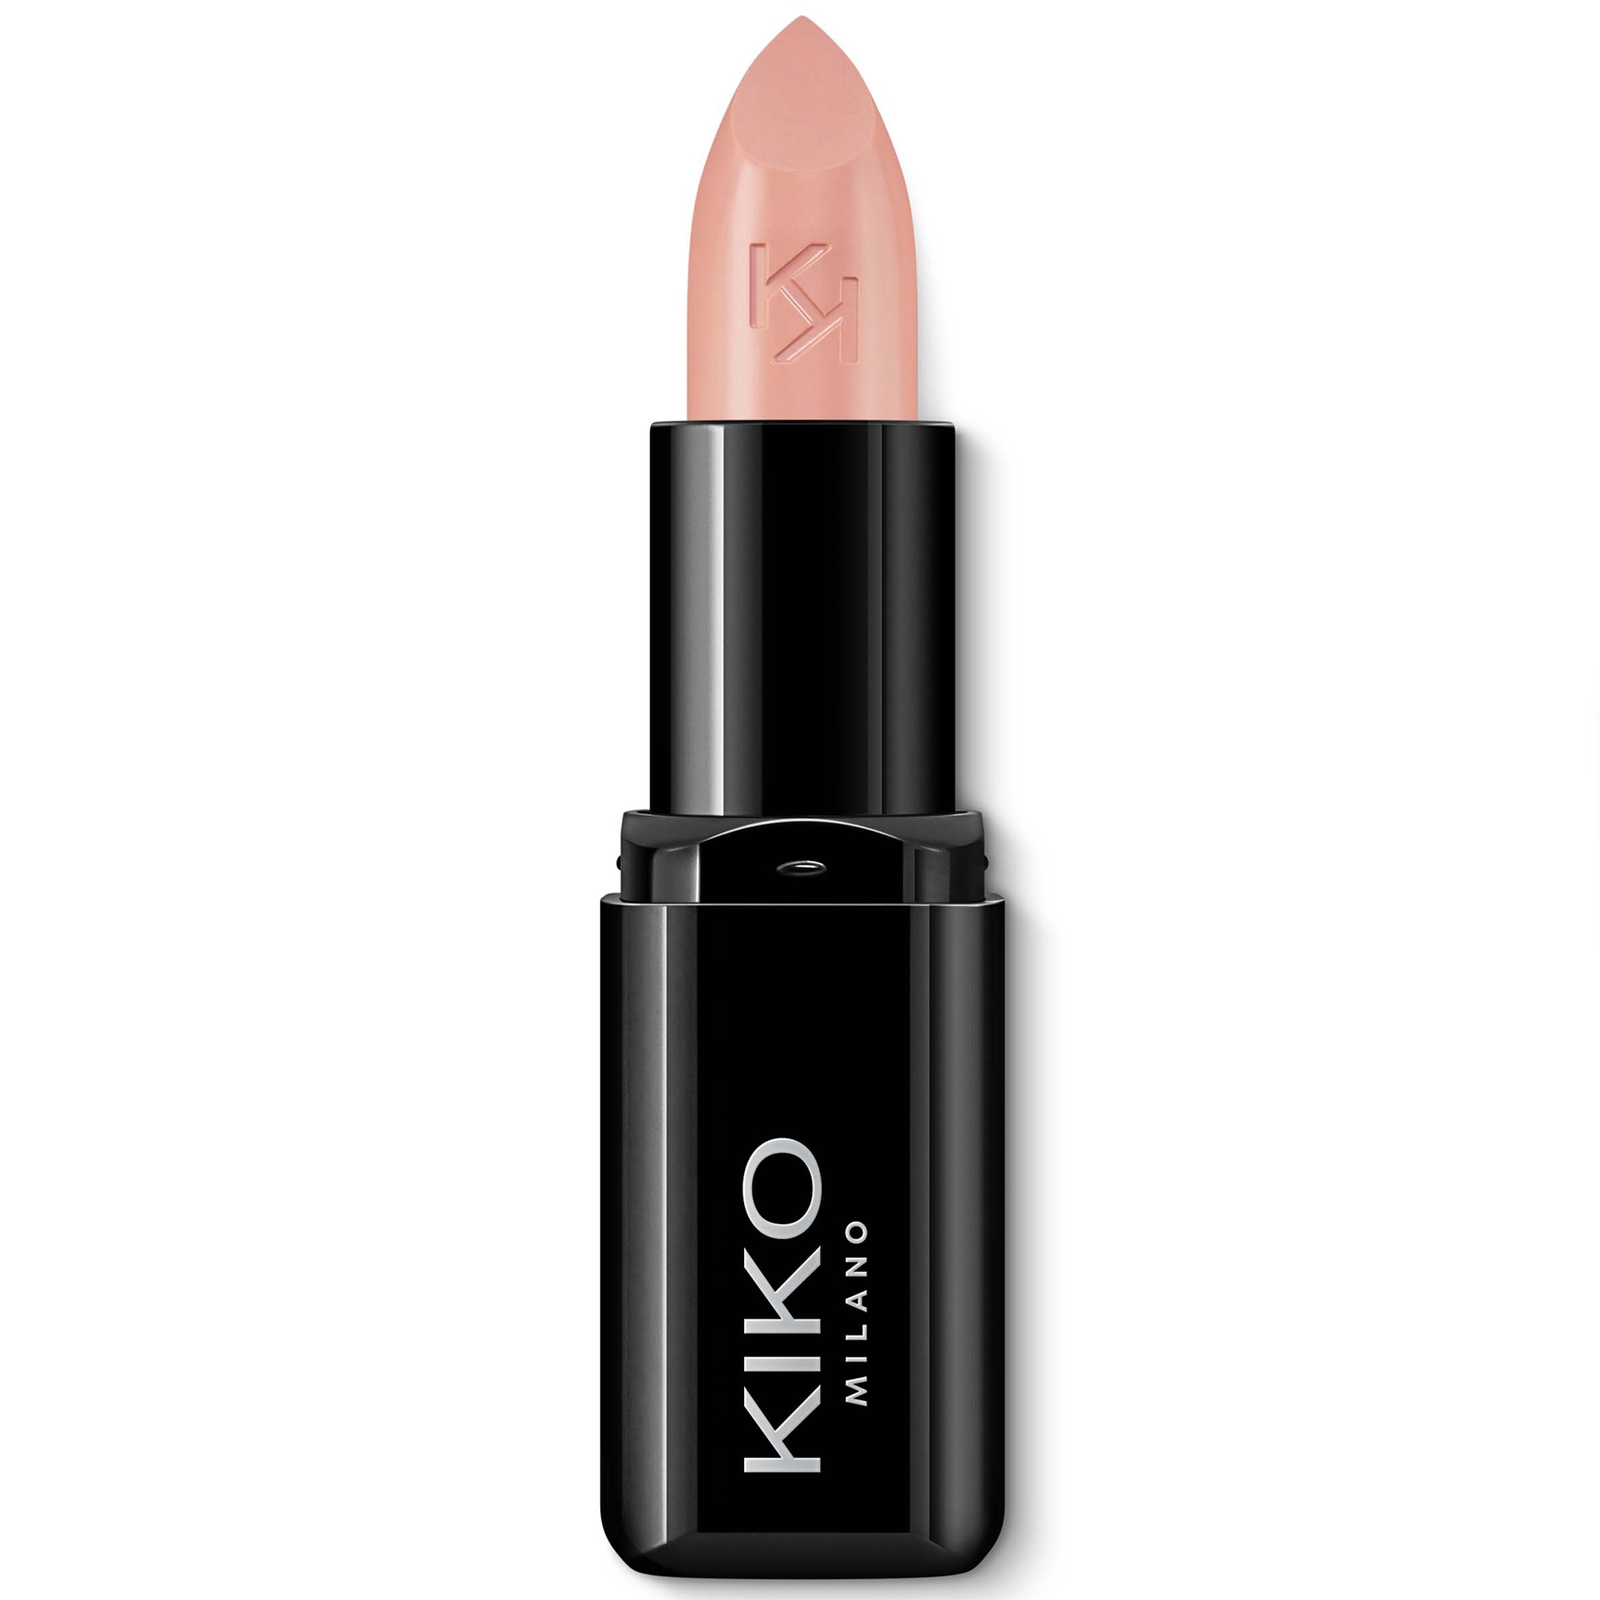 KIKO Milano Smart Fusion Lipstick 3g (Various Shades) - 401 Cachemire Beige